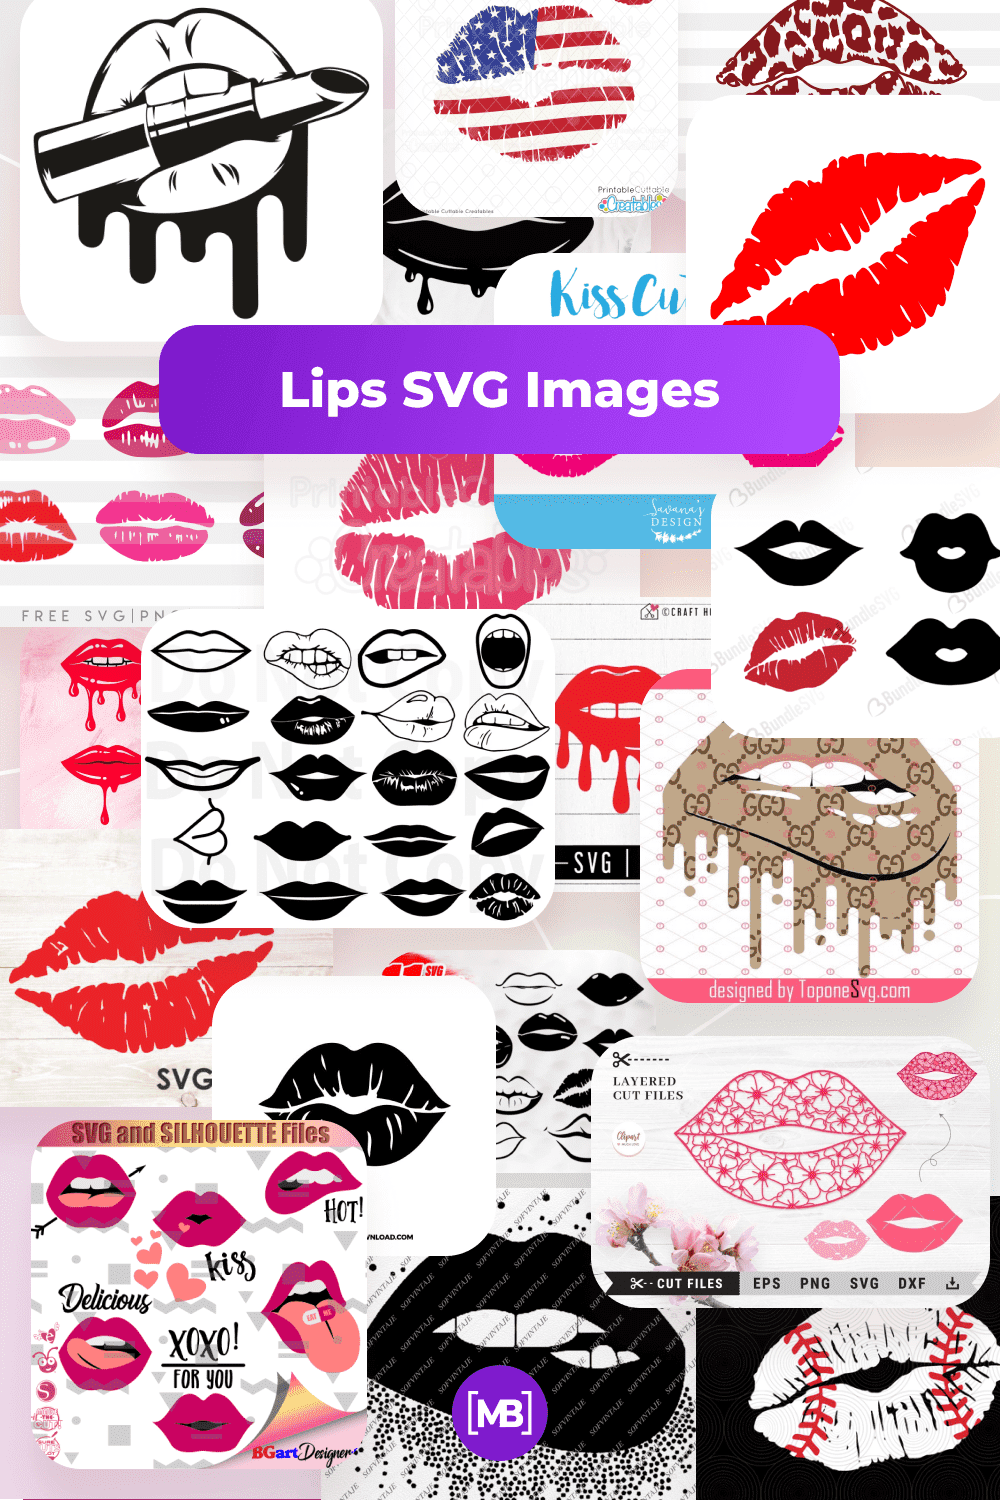 Lips SVG Images Pinterest.